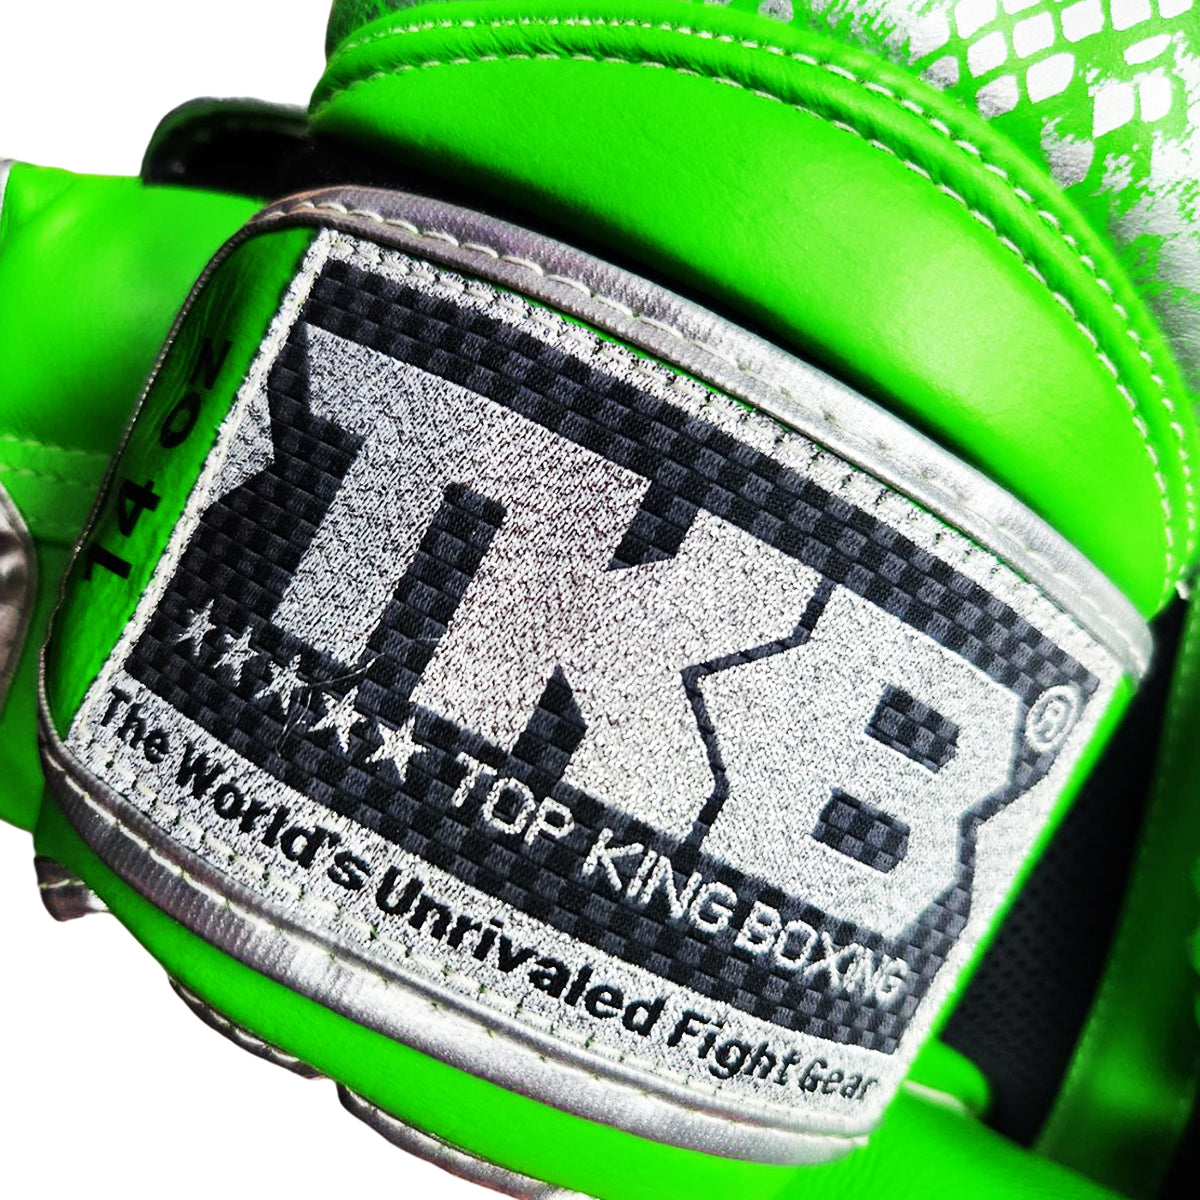 Boxing Gloves Top King TKBGSS-02 Air Green Silver Muay Thai (Old Logo)